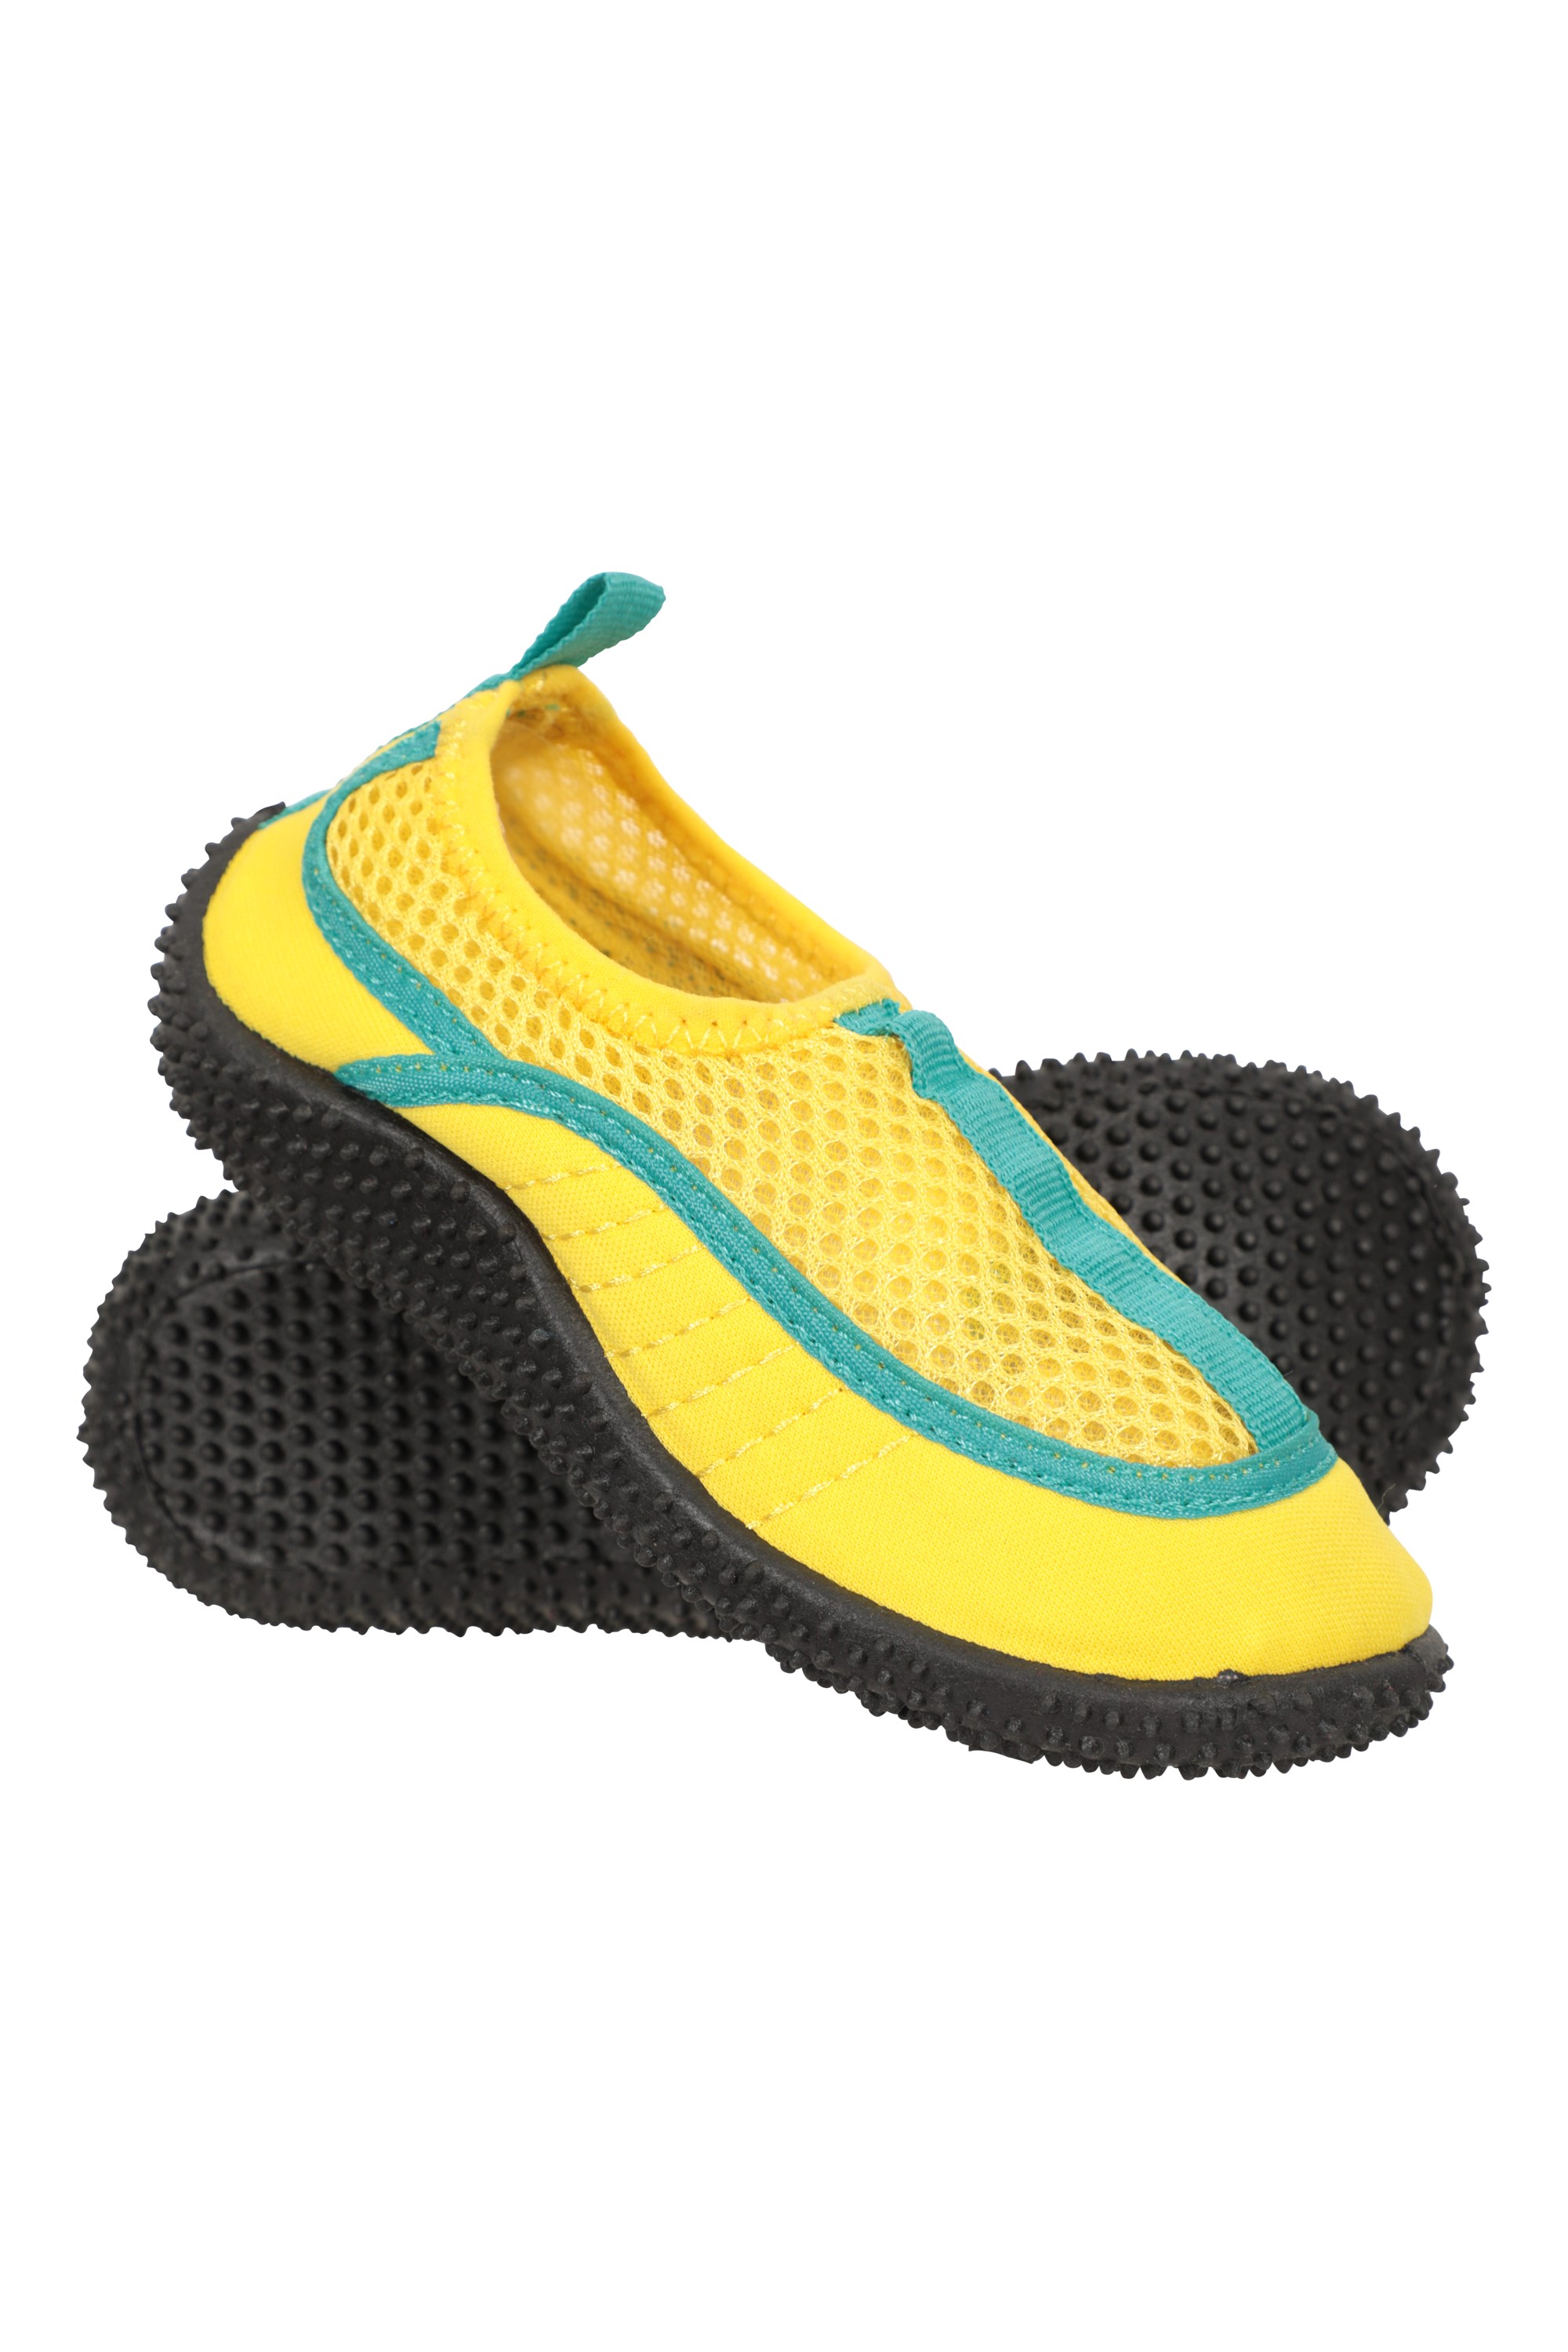 Bermuda Junior Aqua Shoe - Yellow